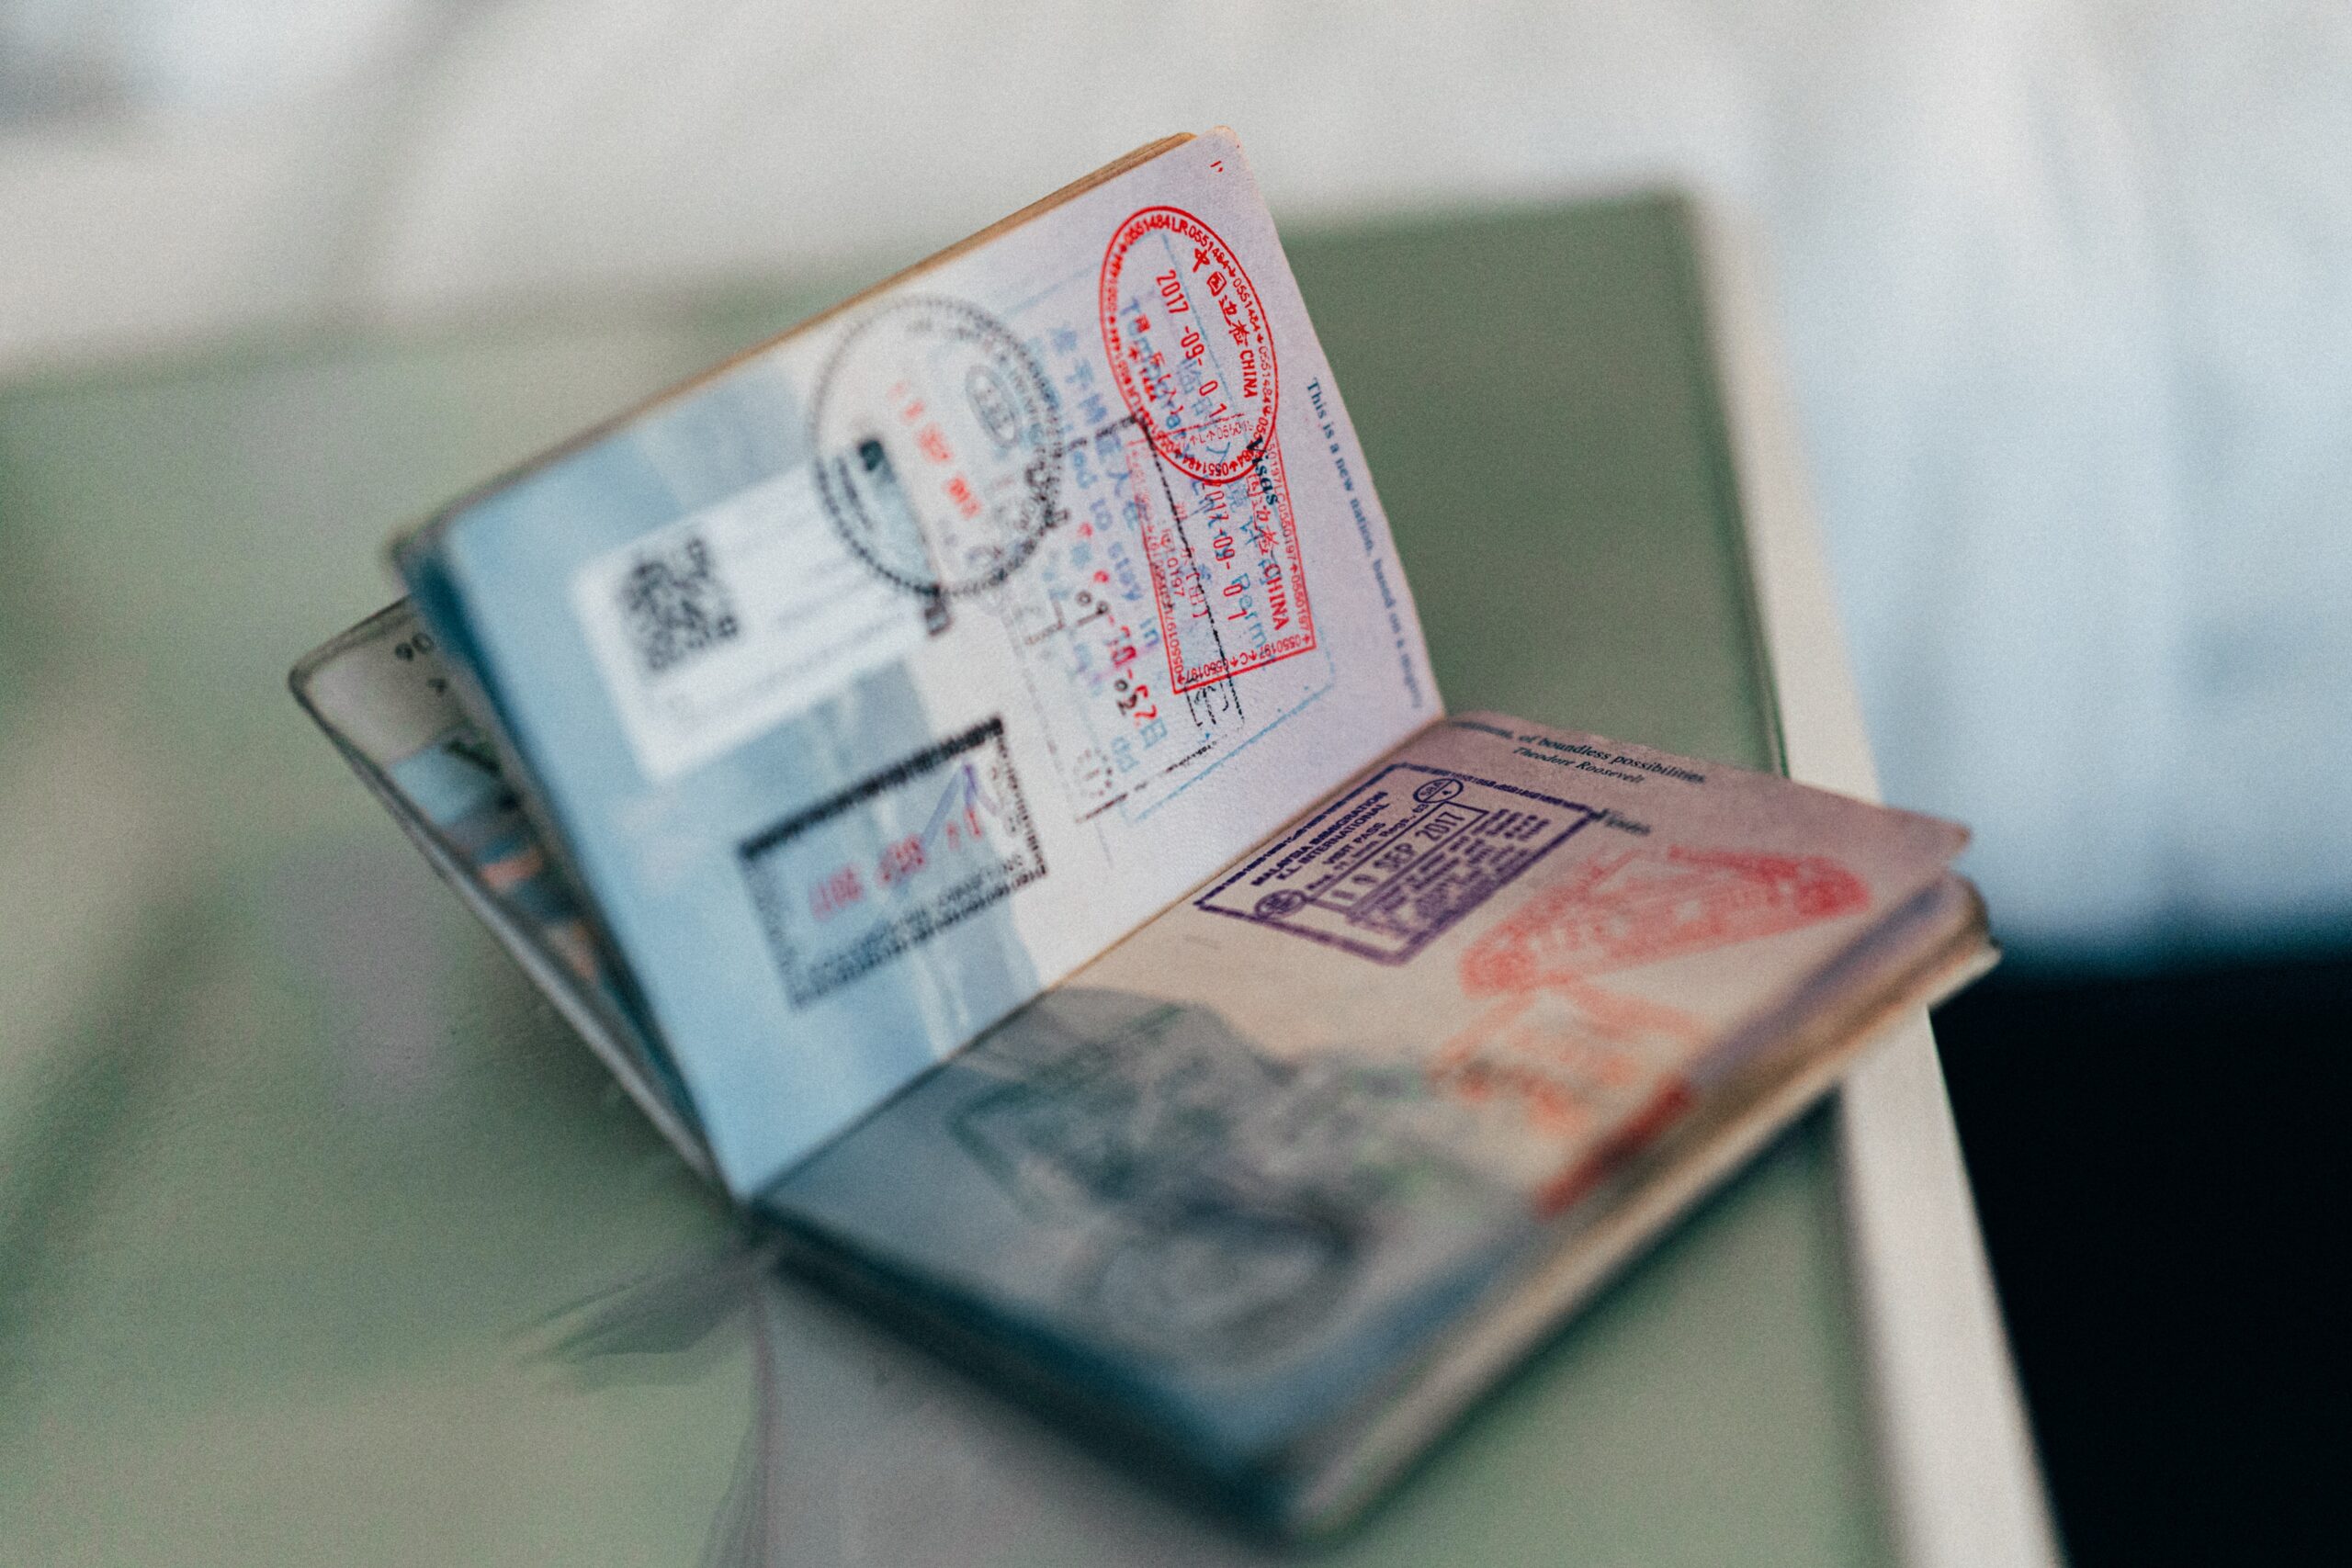 Vietnam 5 year Visa Exemption – Requirements & How to Get